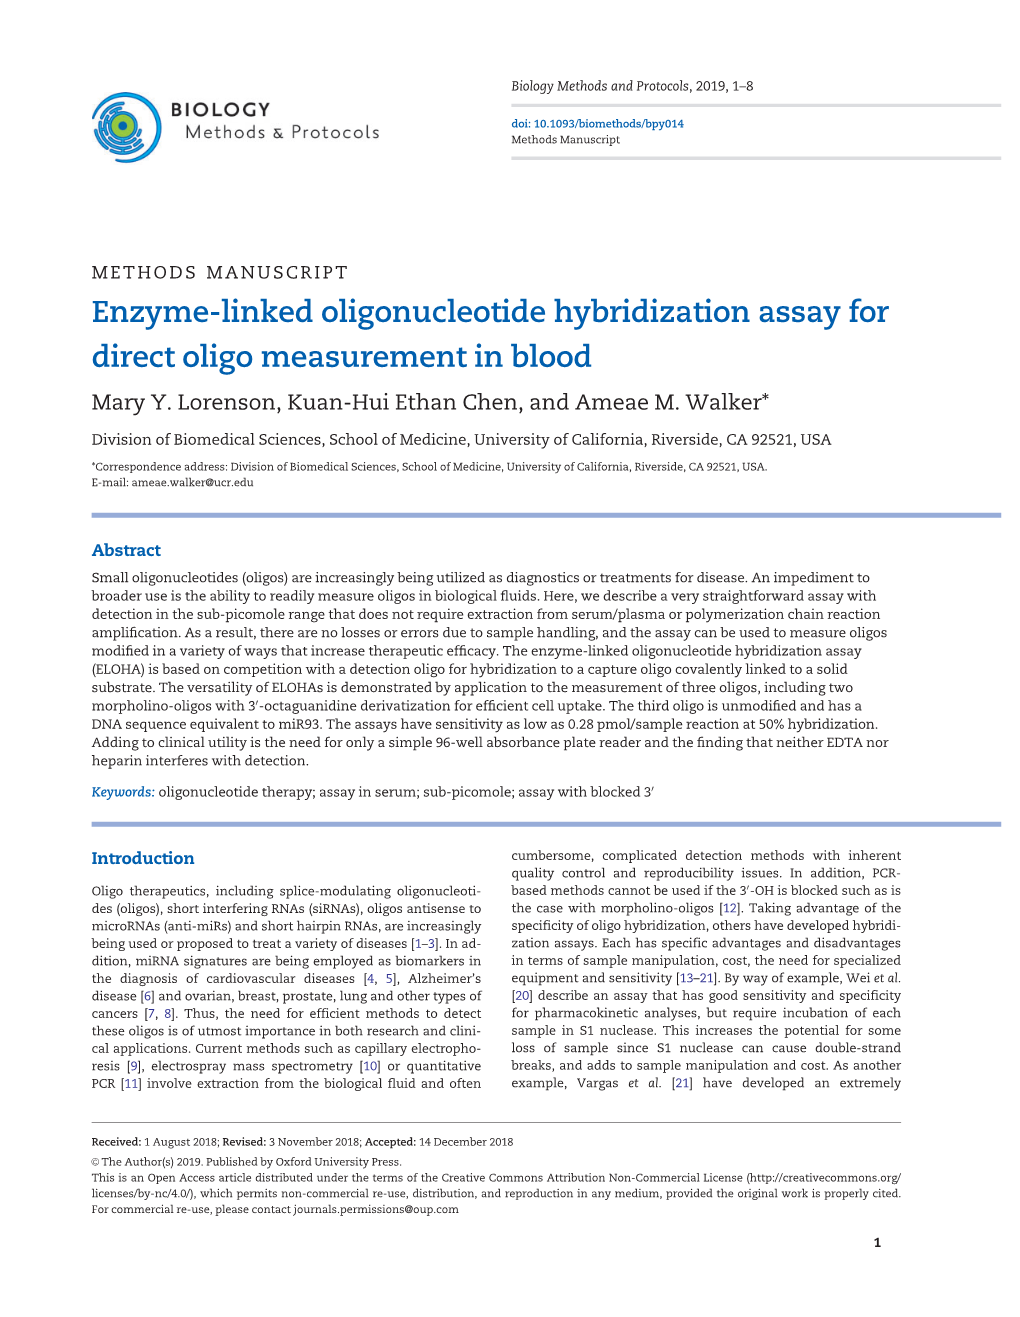 Enzyme-Linked Oligonucleotide Hybridization Assay for Direct Oligo Measurement in Blood Mary Y